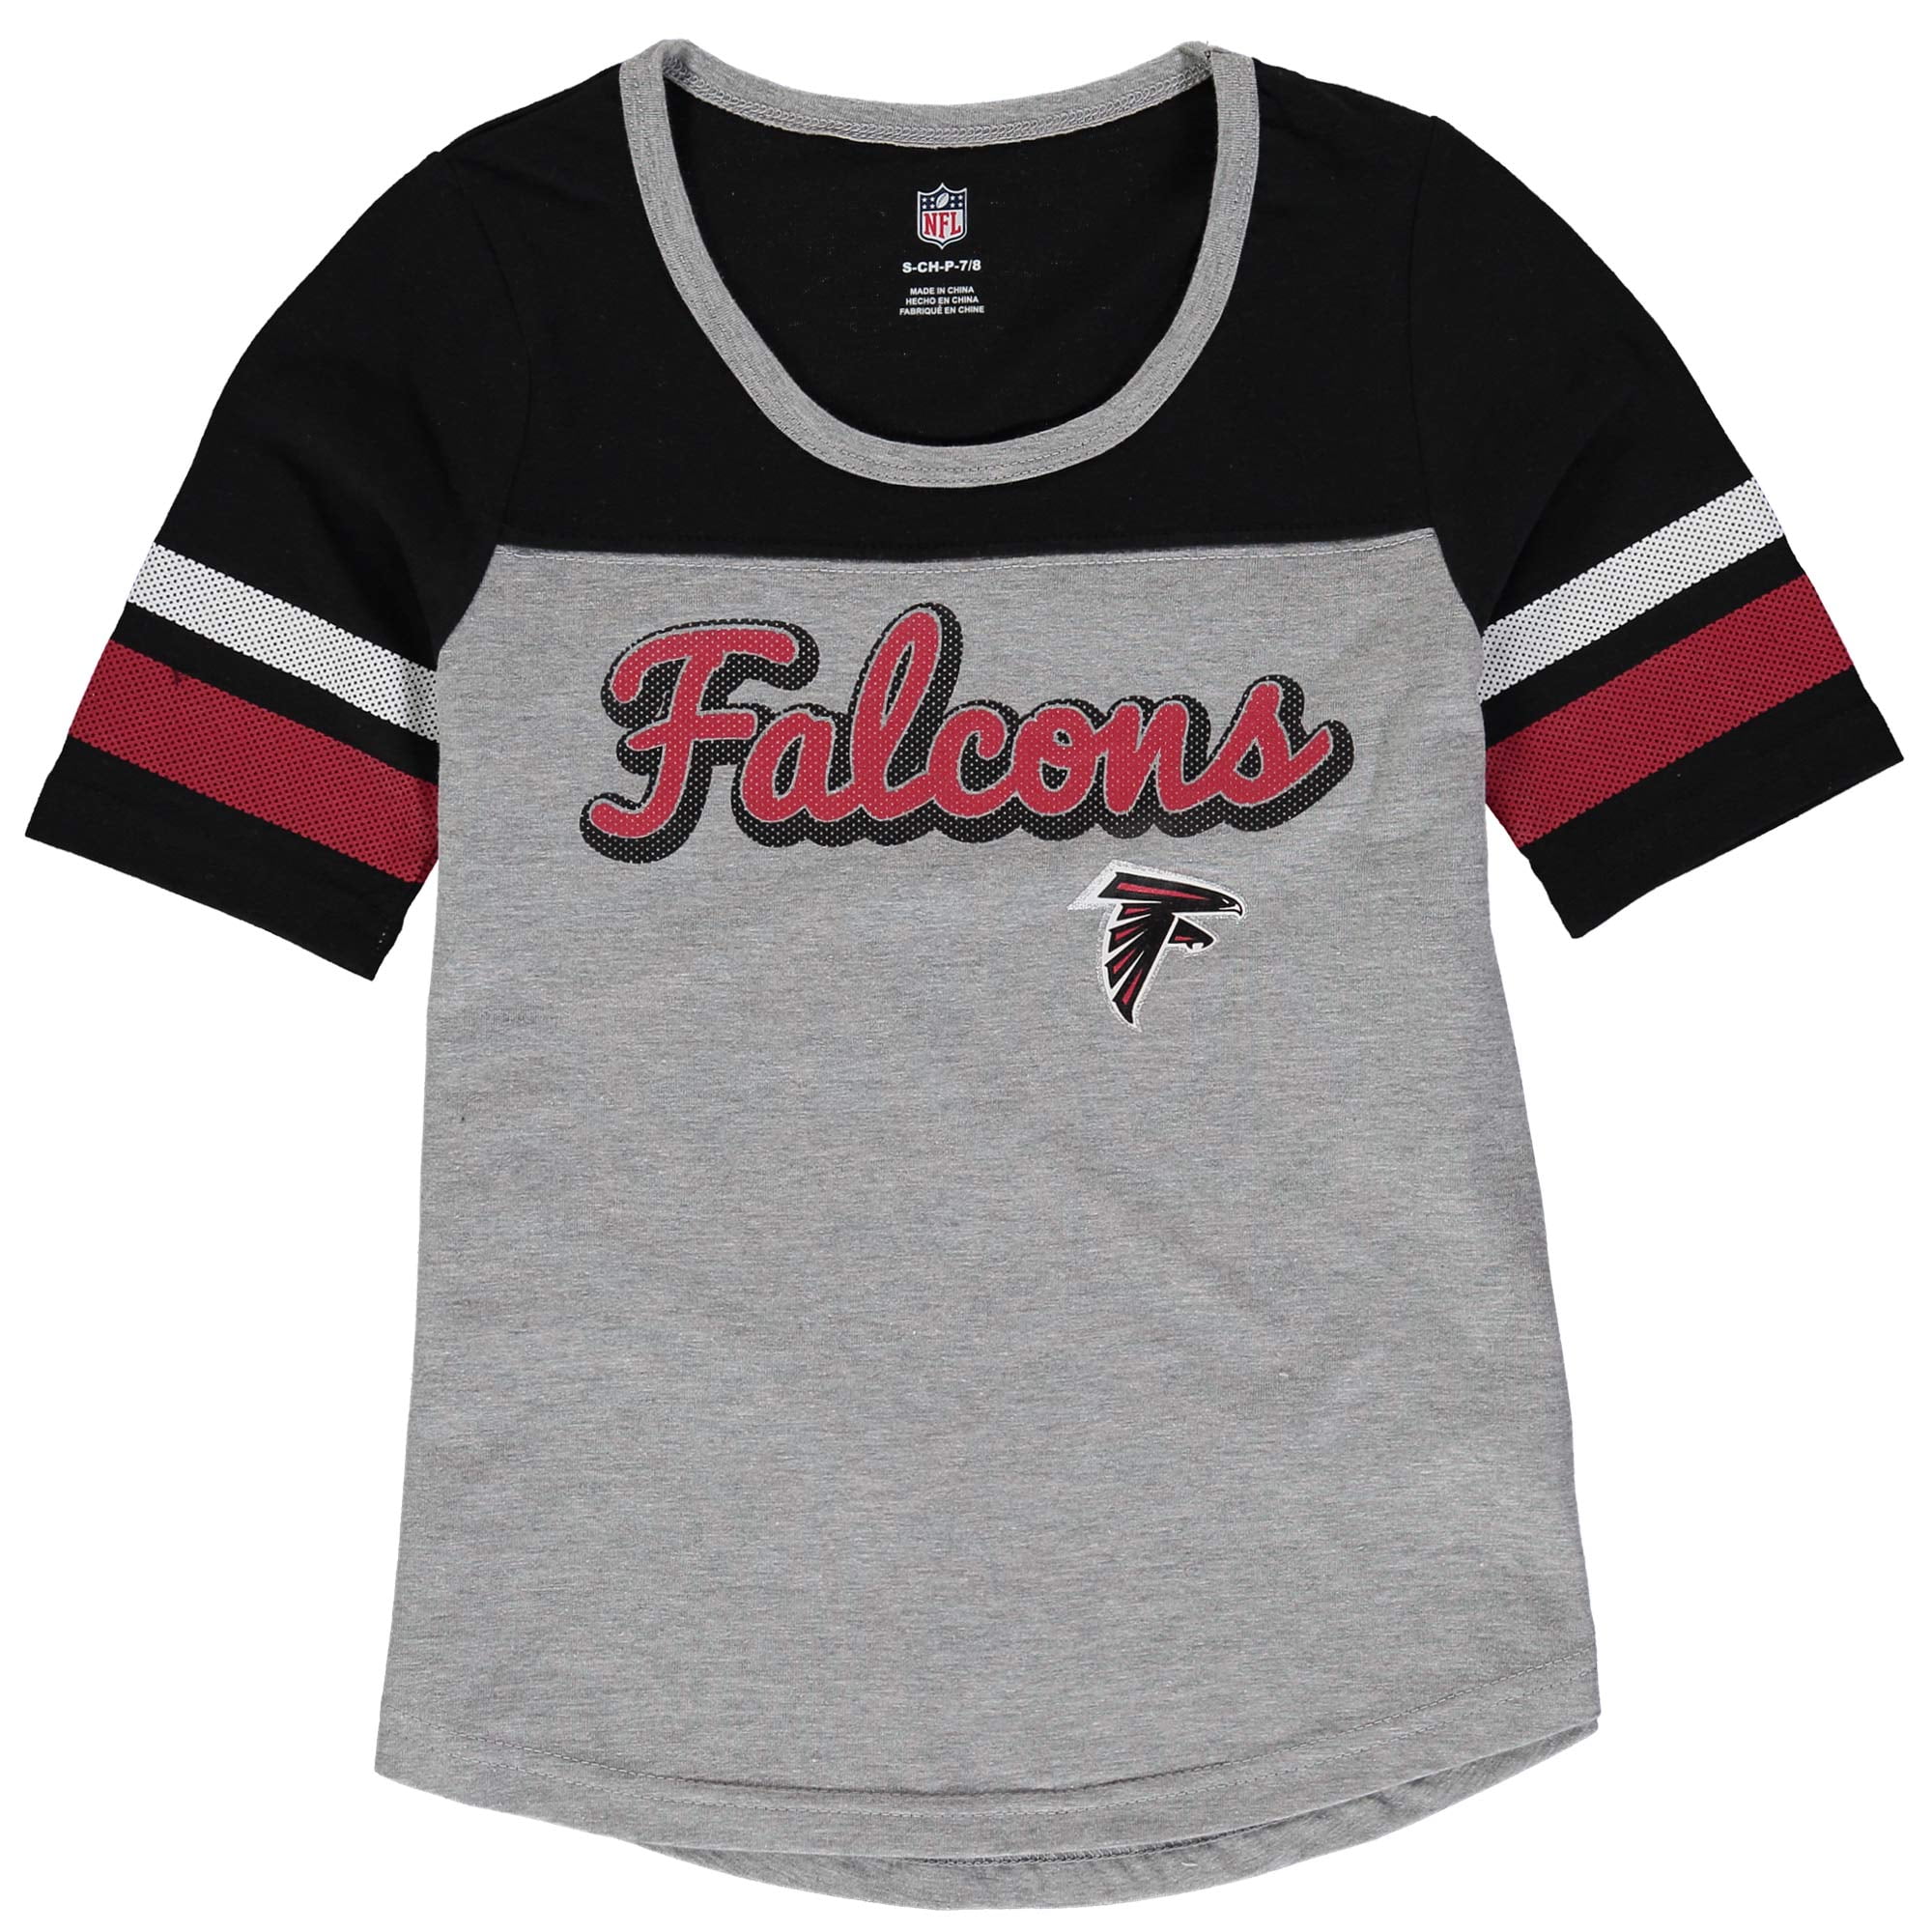 Atlanta Falcons Girls Youth Fan-Tastic 